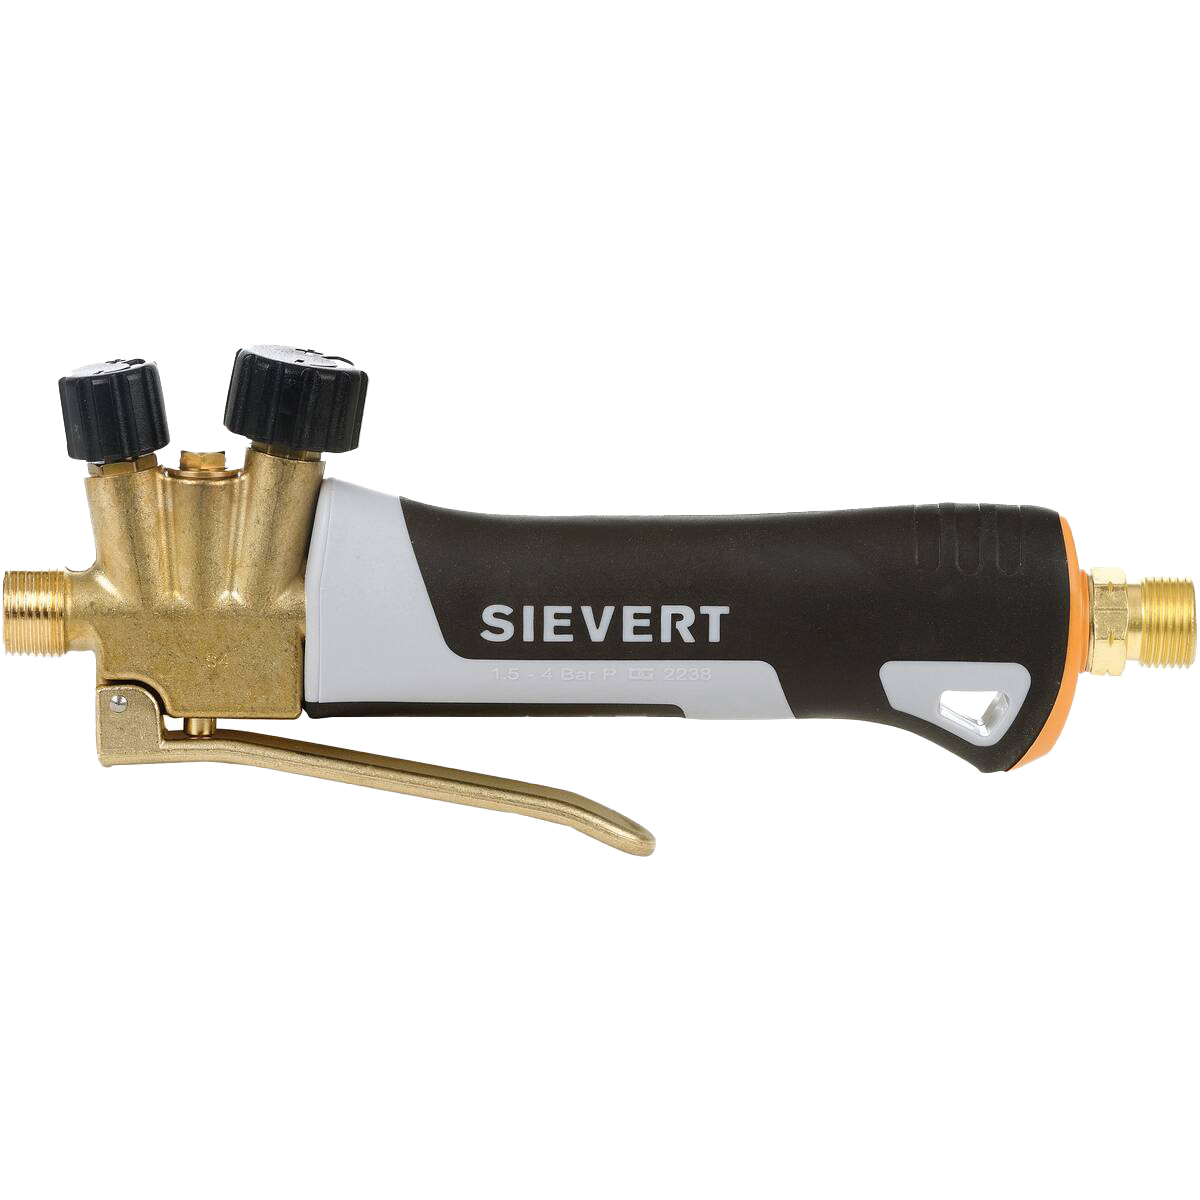 Sievert Pro 88 - DeDakgroothandel